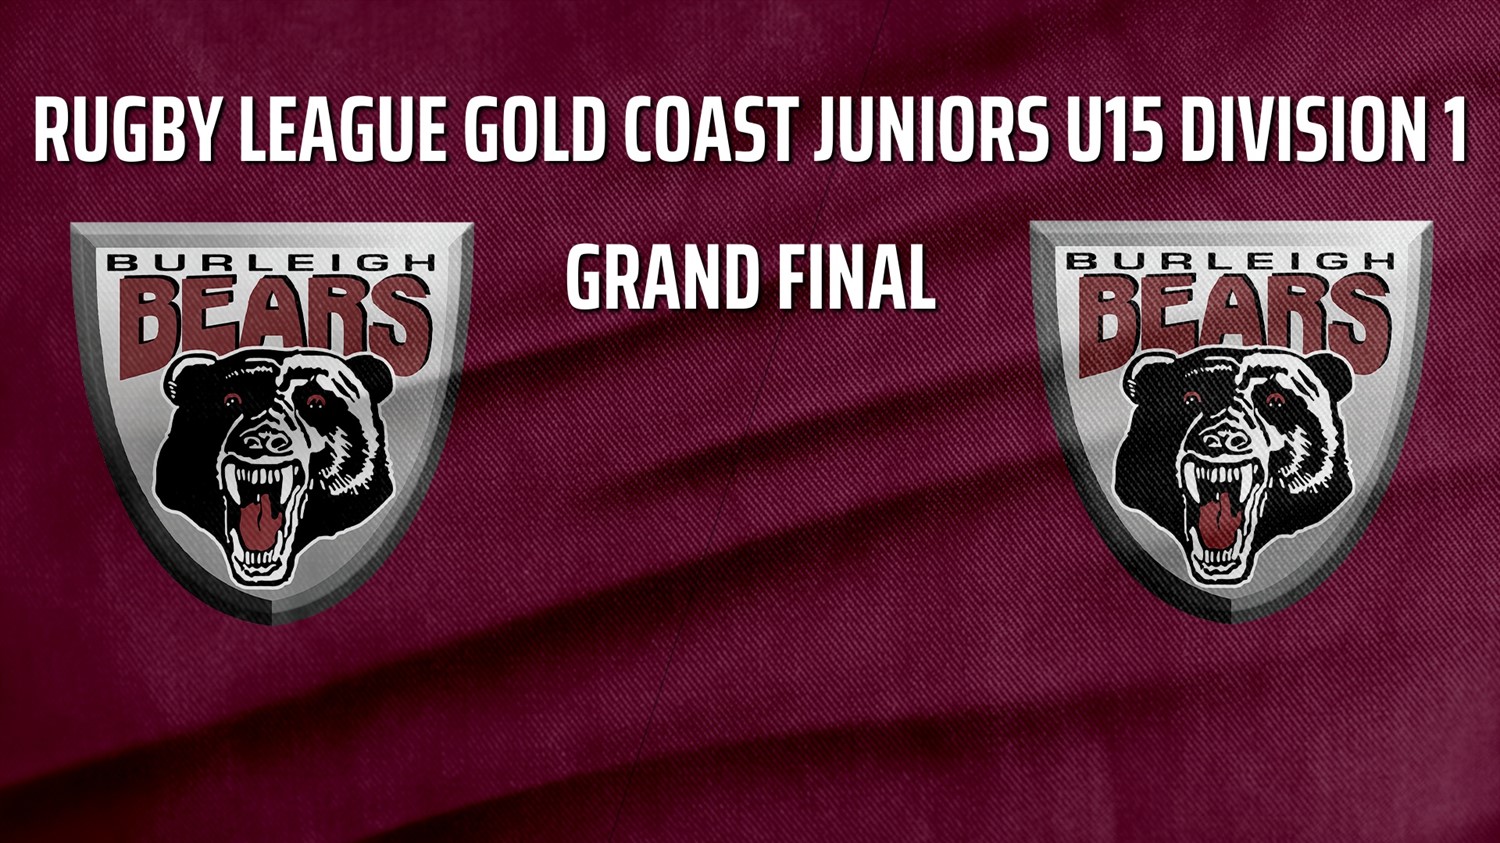 210925-Rugby League Gold Coast Juniors U15 Division 1 Grand Final -Burleigh Bears Maroon v Burleigh Bears White Slate Image